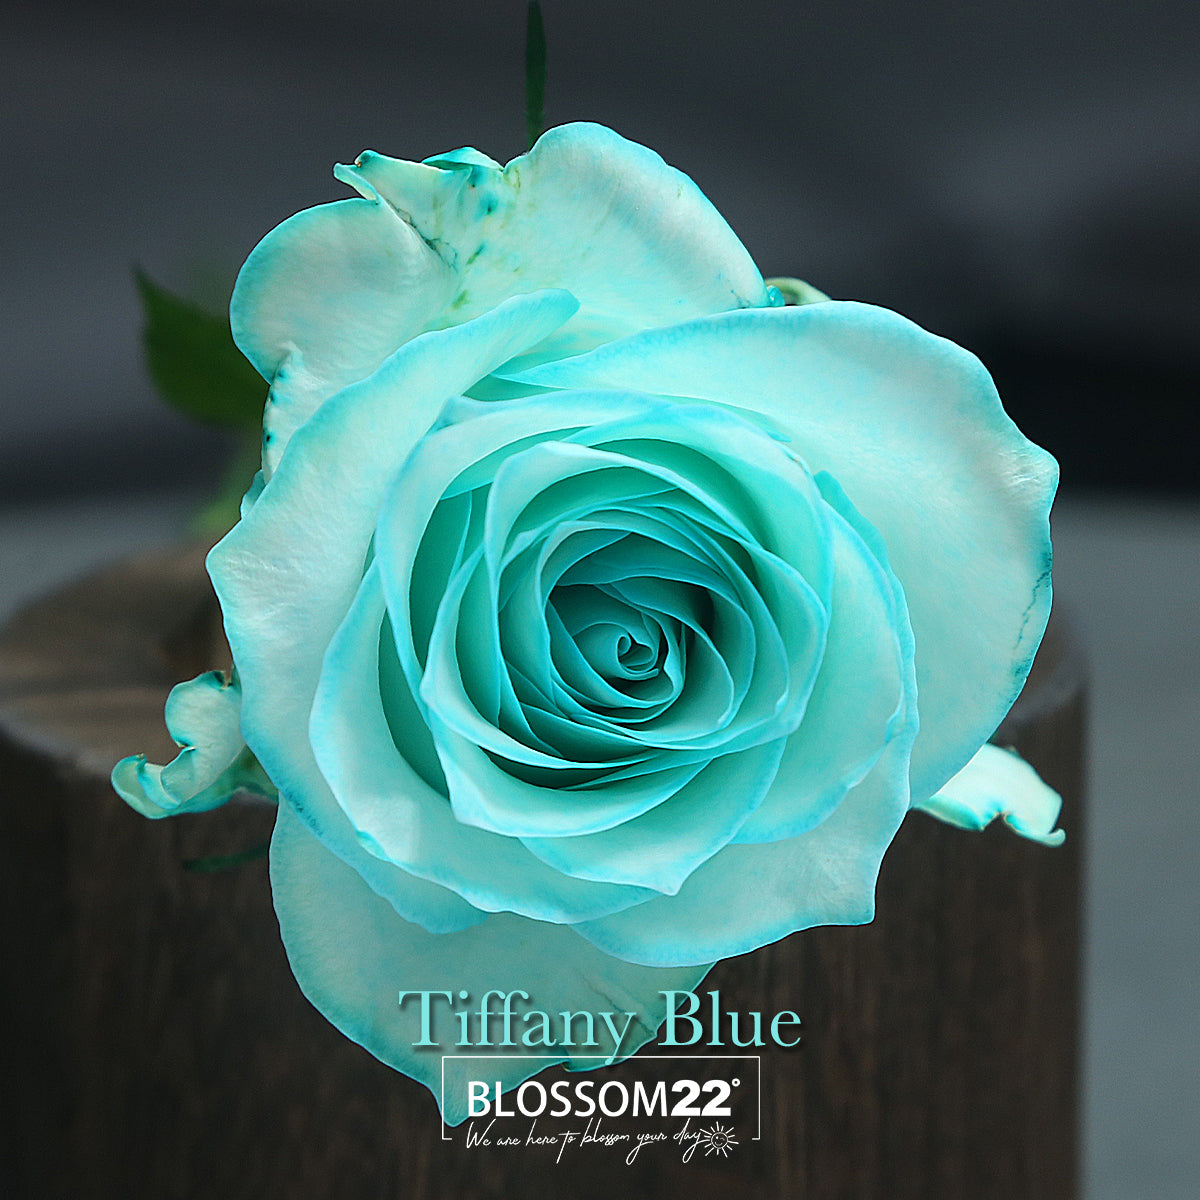 99 蒂芬妮藍玫瑰鮮花束｜99 Tiffany Blue Dyeing Rose Bouquet｜情人節花